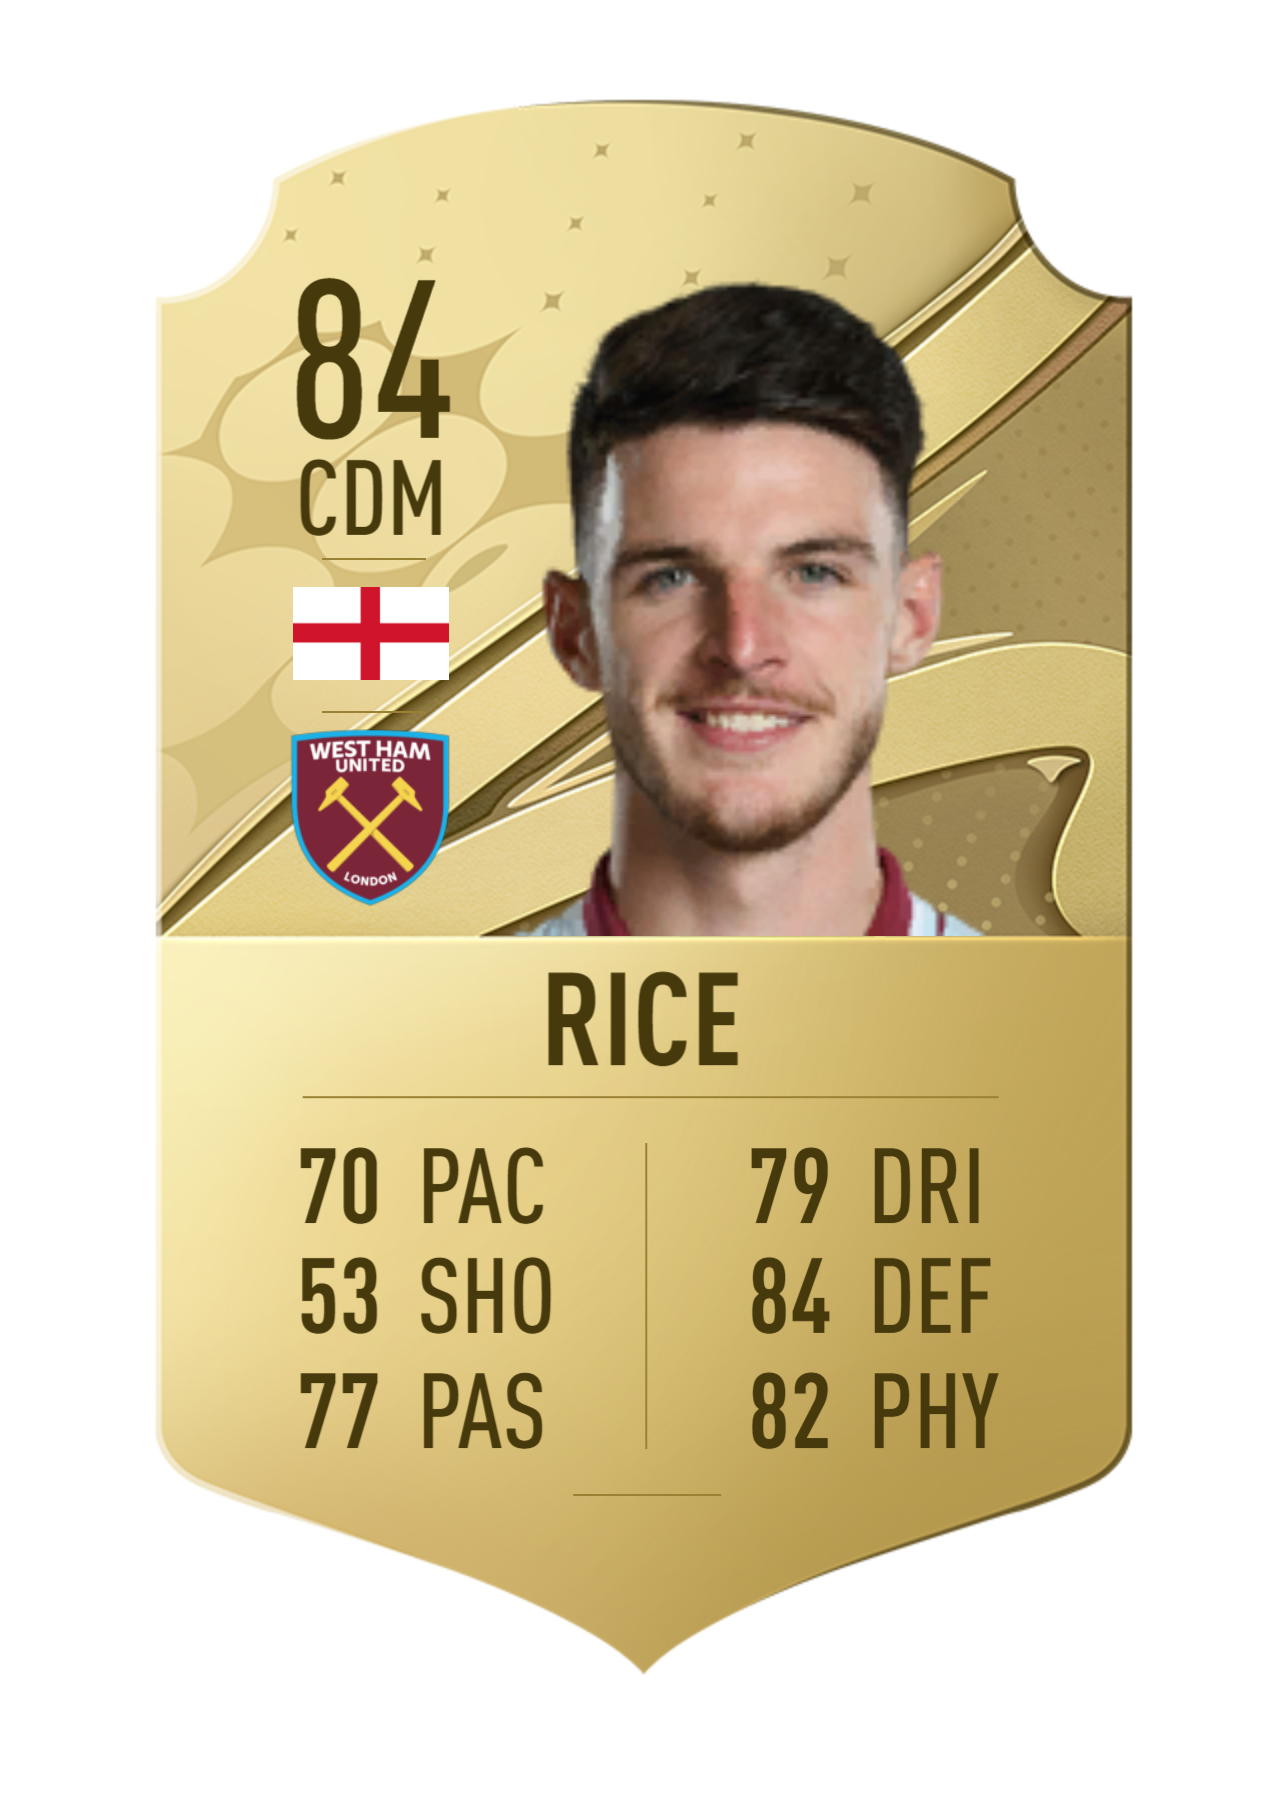 FIFA 23 Declan Rice rating